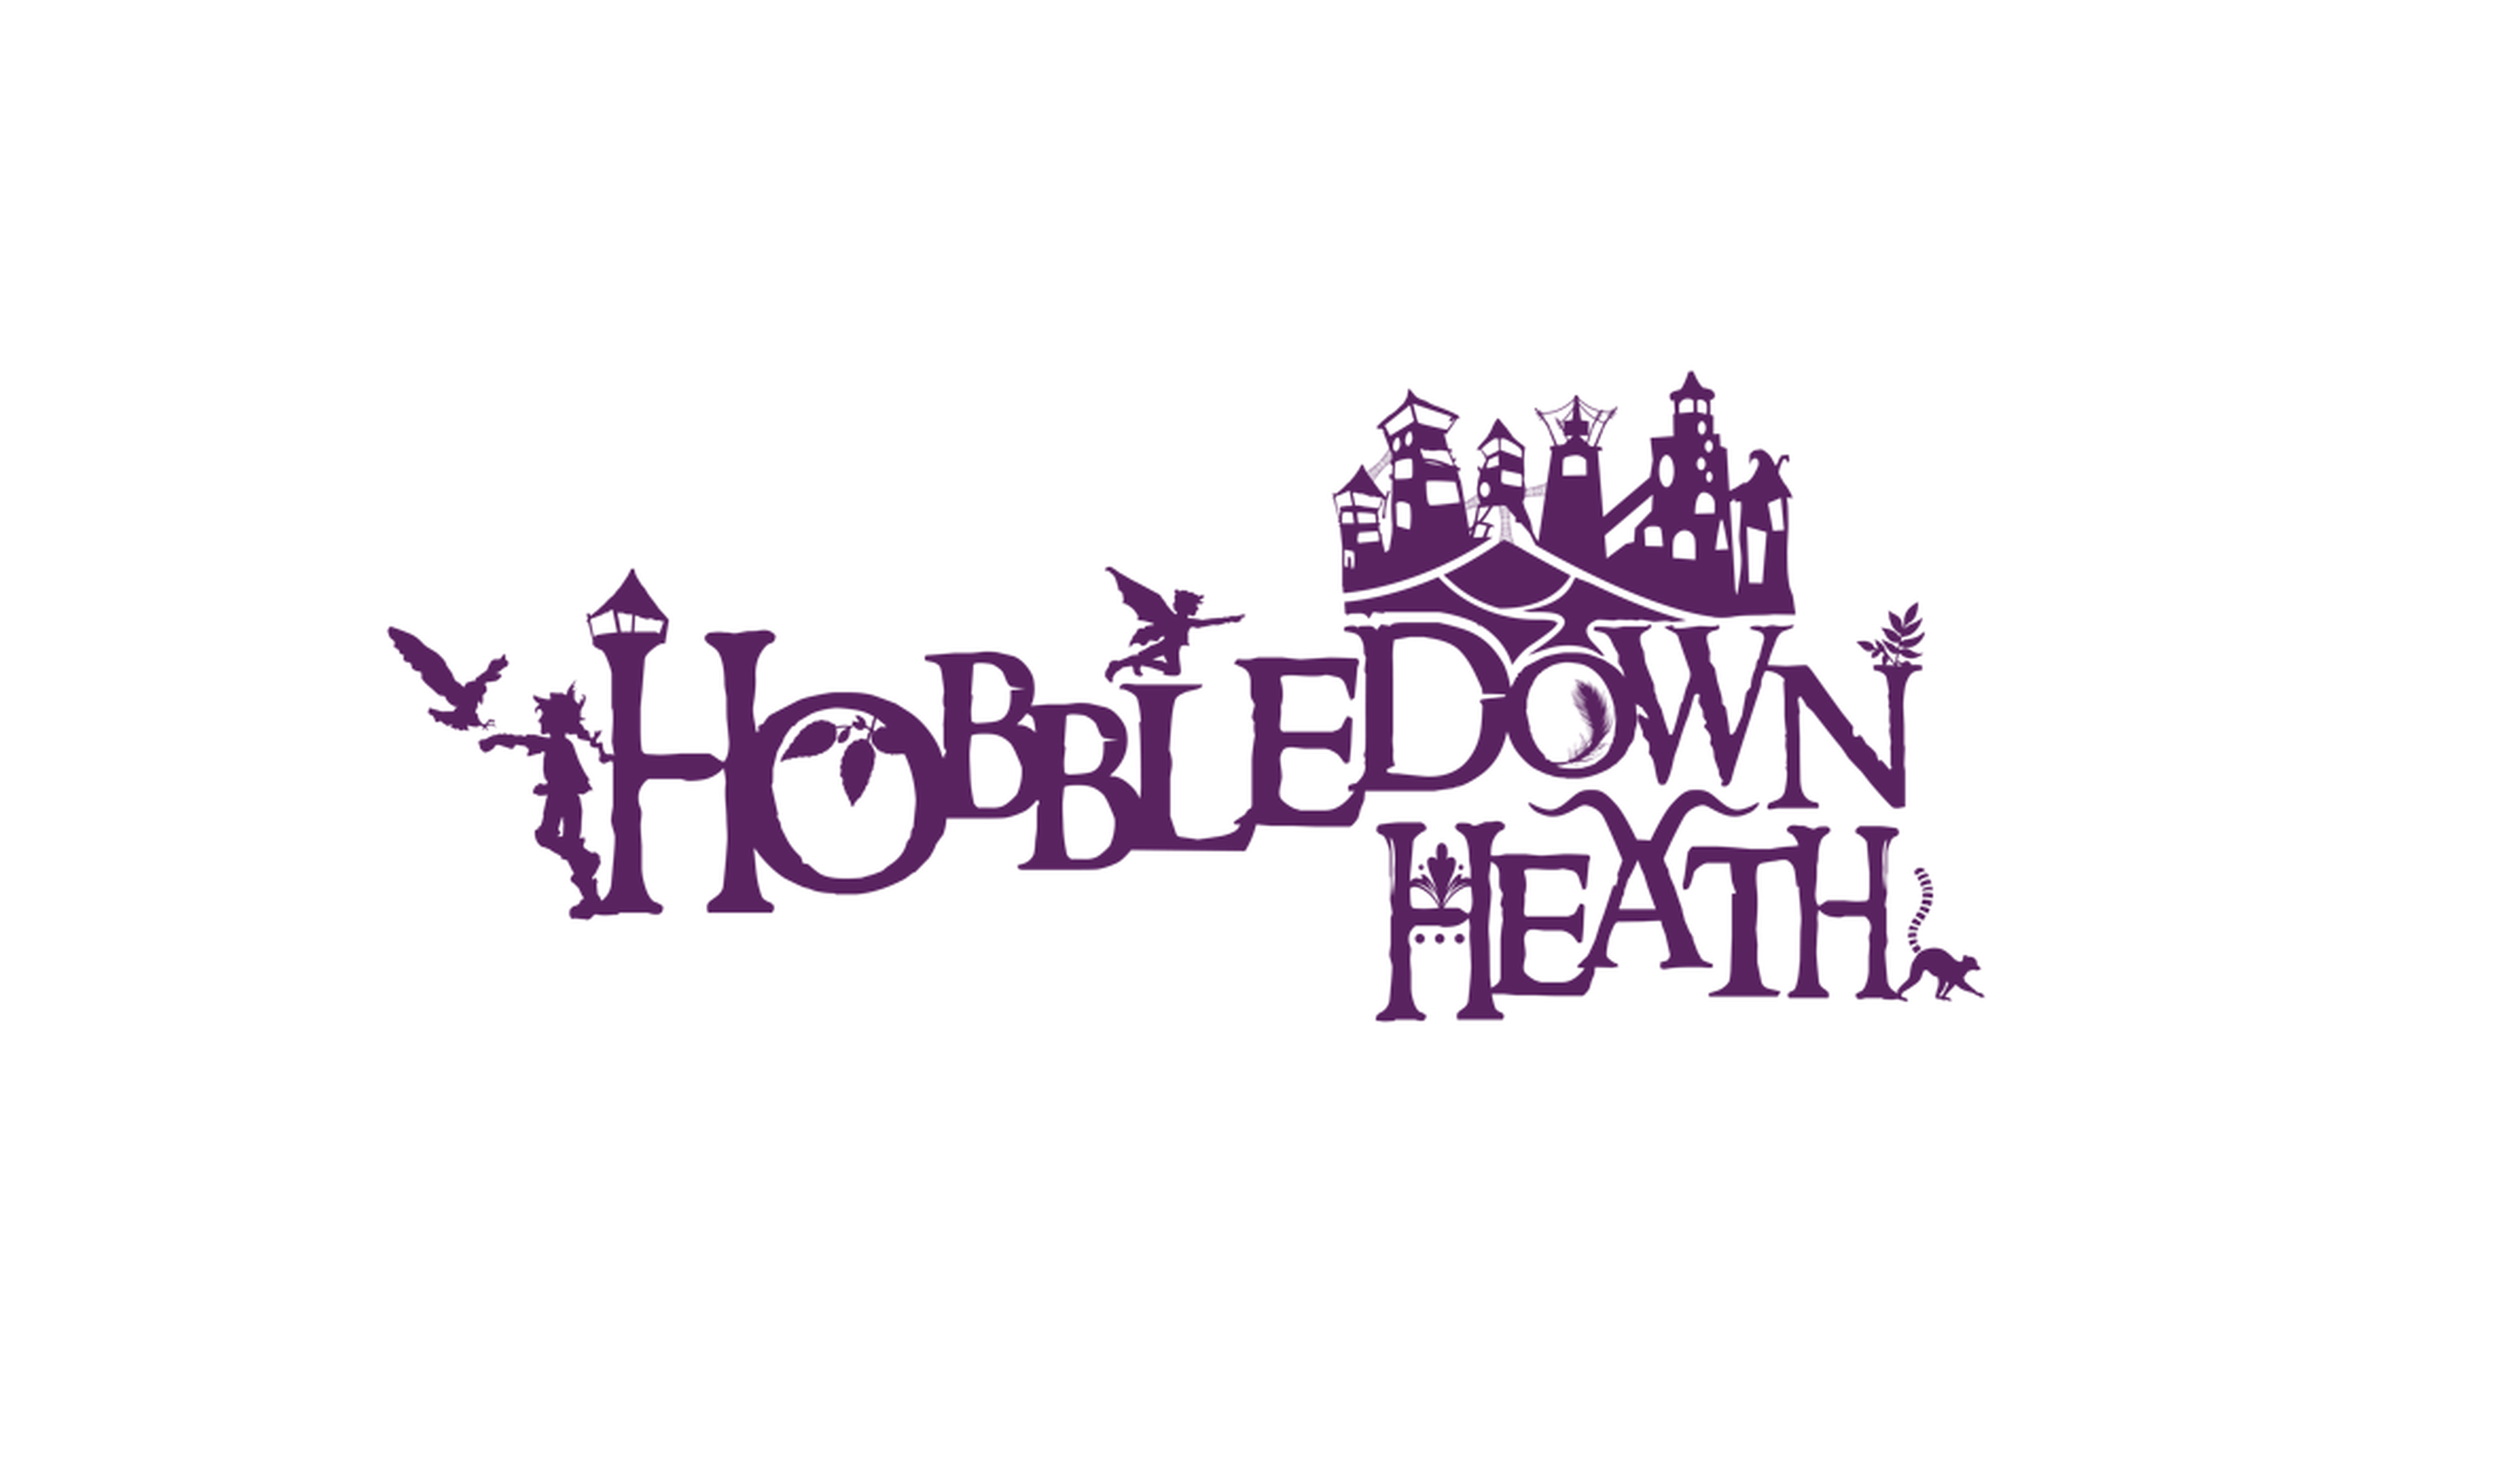 Hobbledown Heath